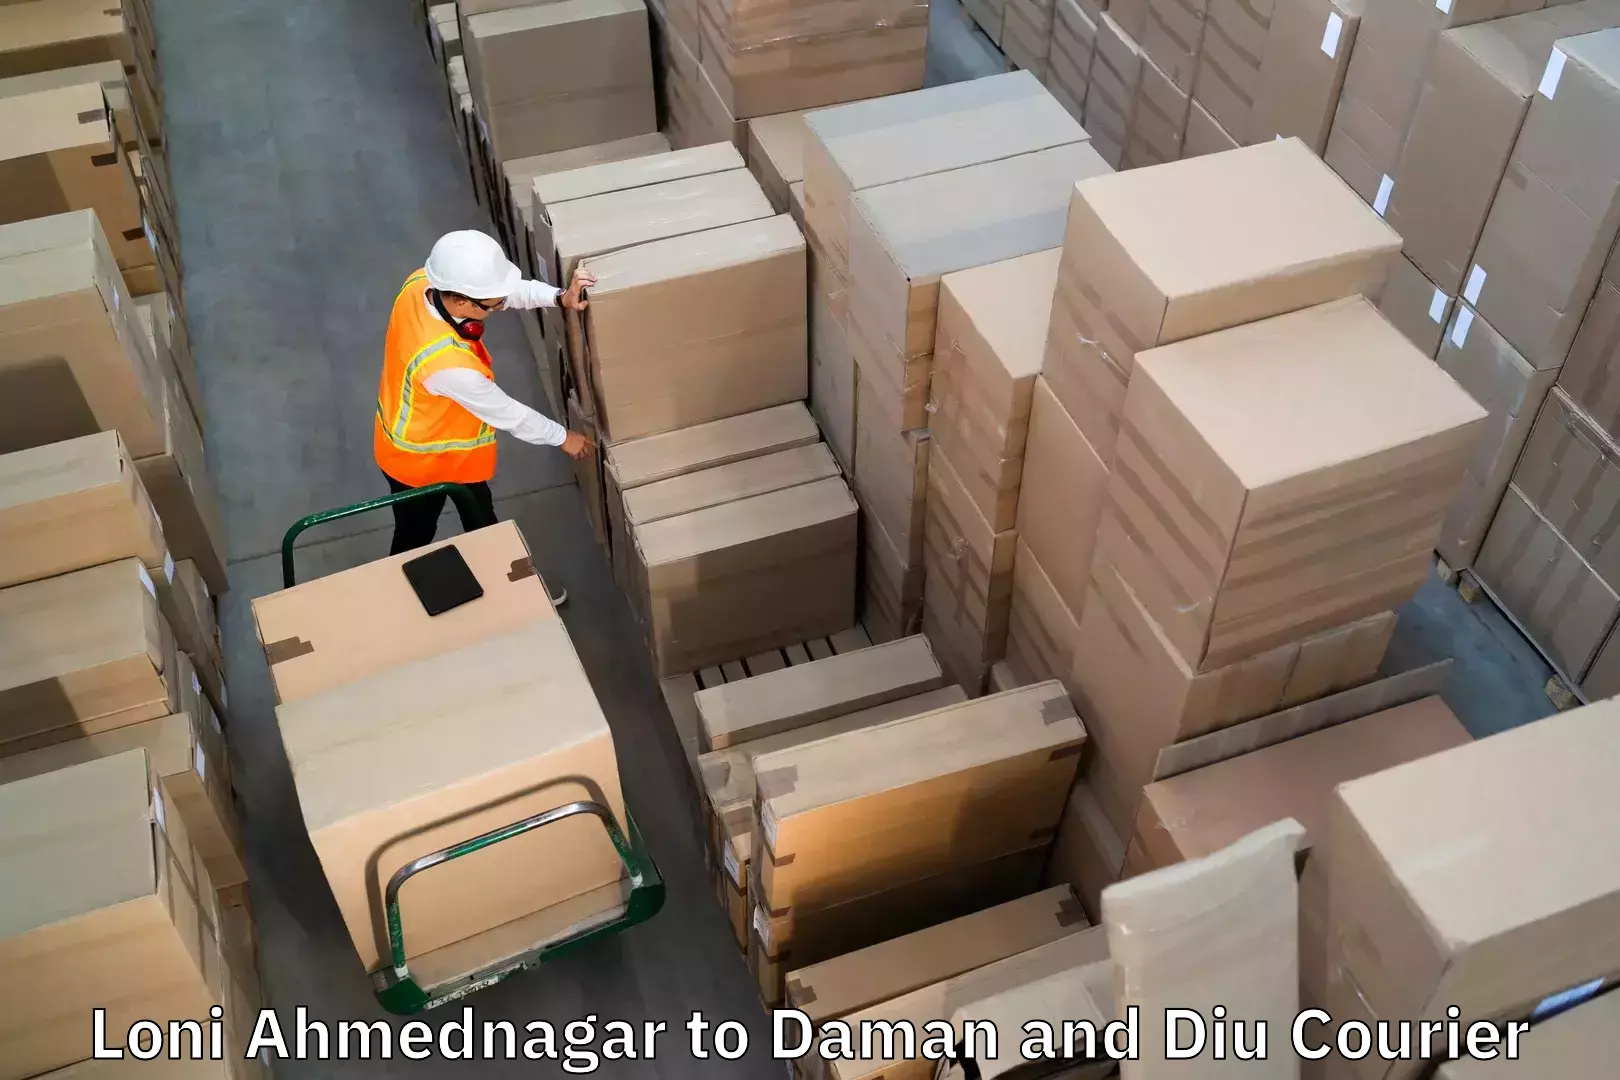 Doorstep luggage collection Loni Ahmednagar to Diu